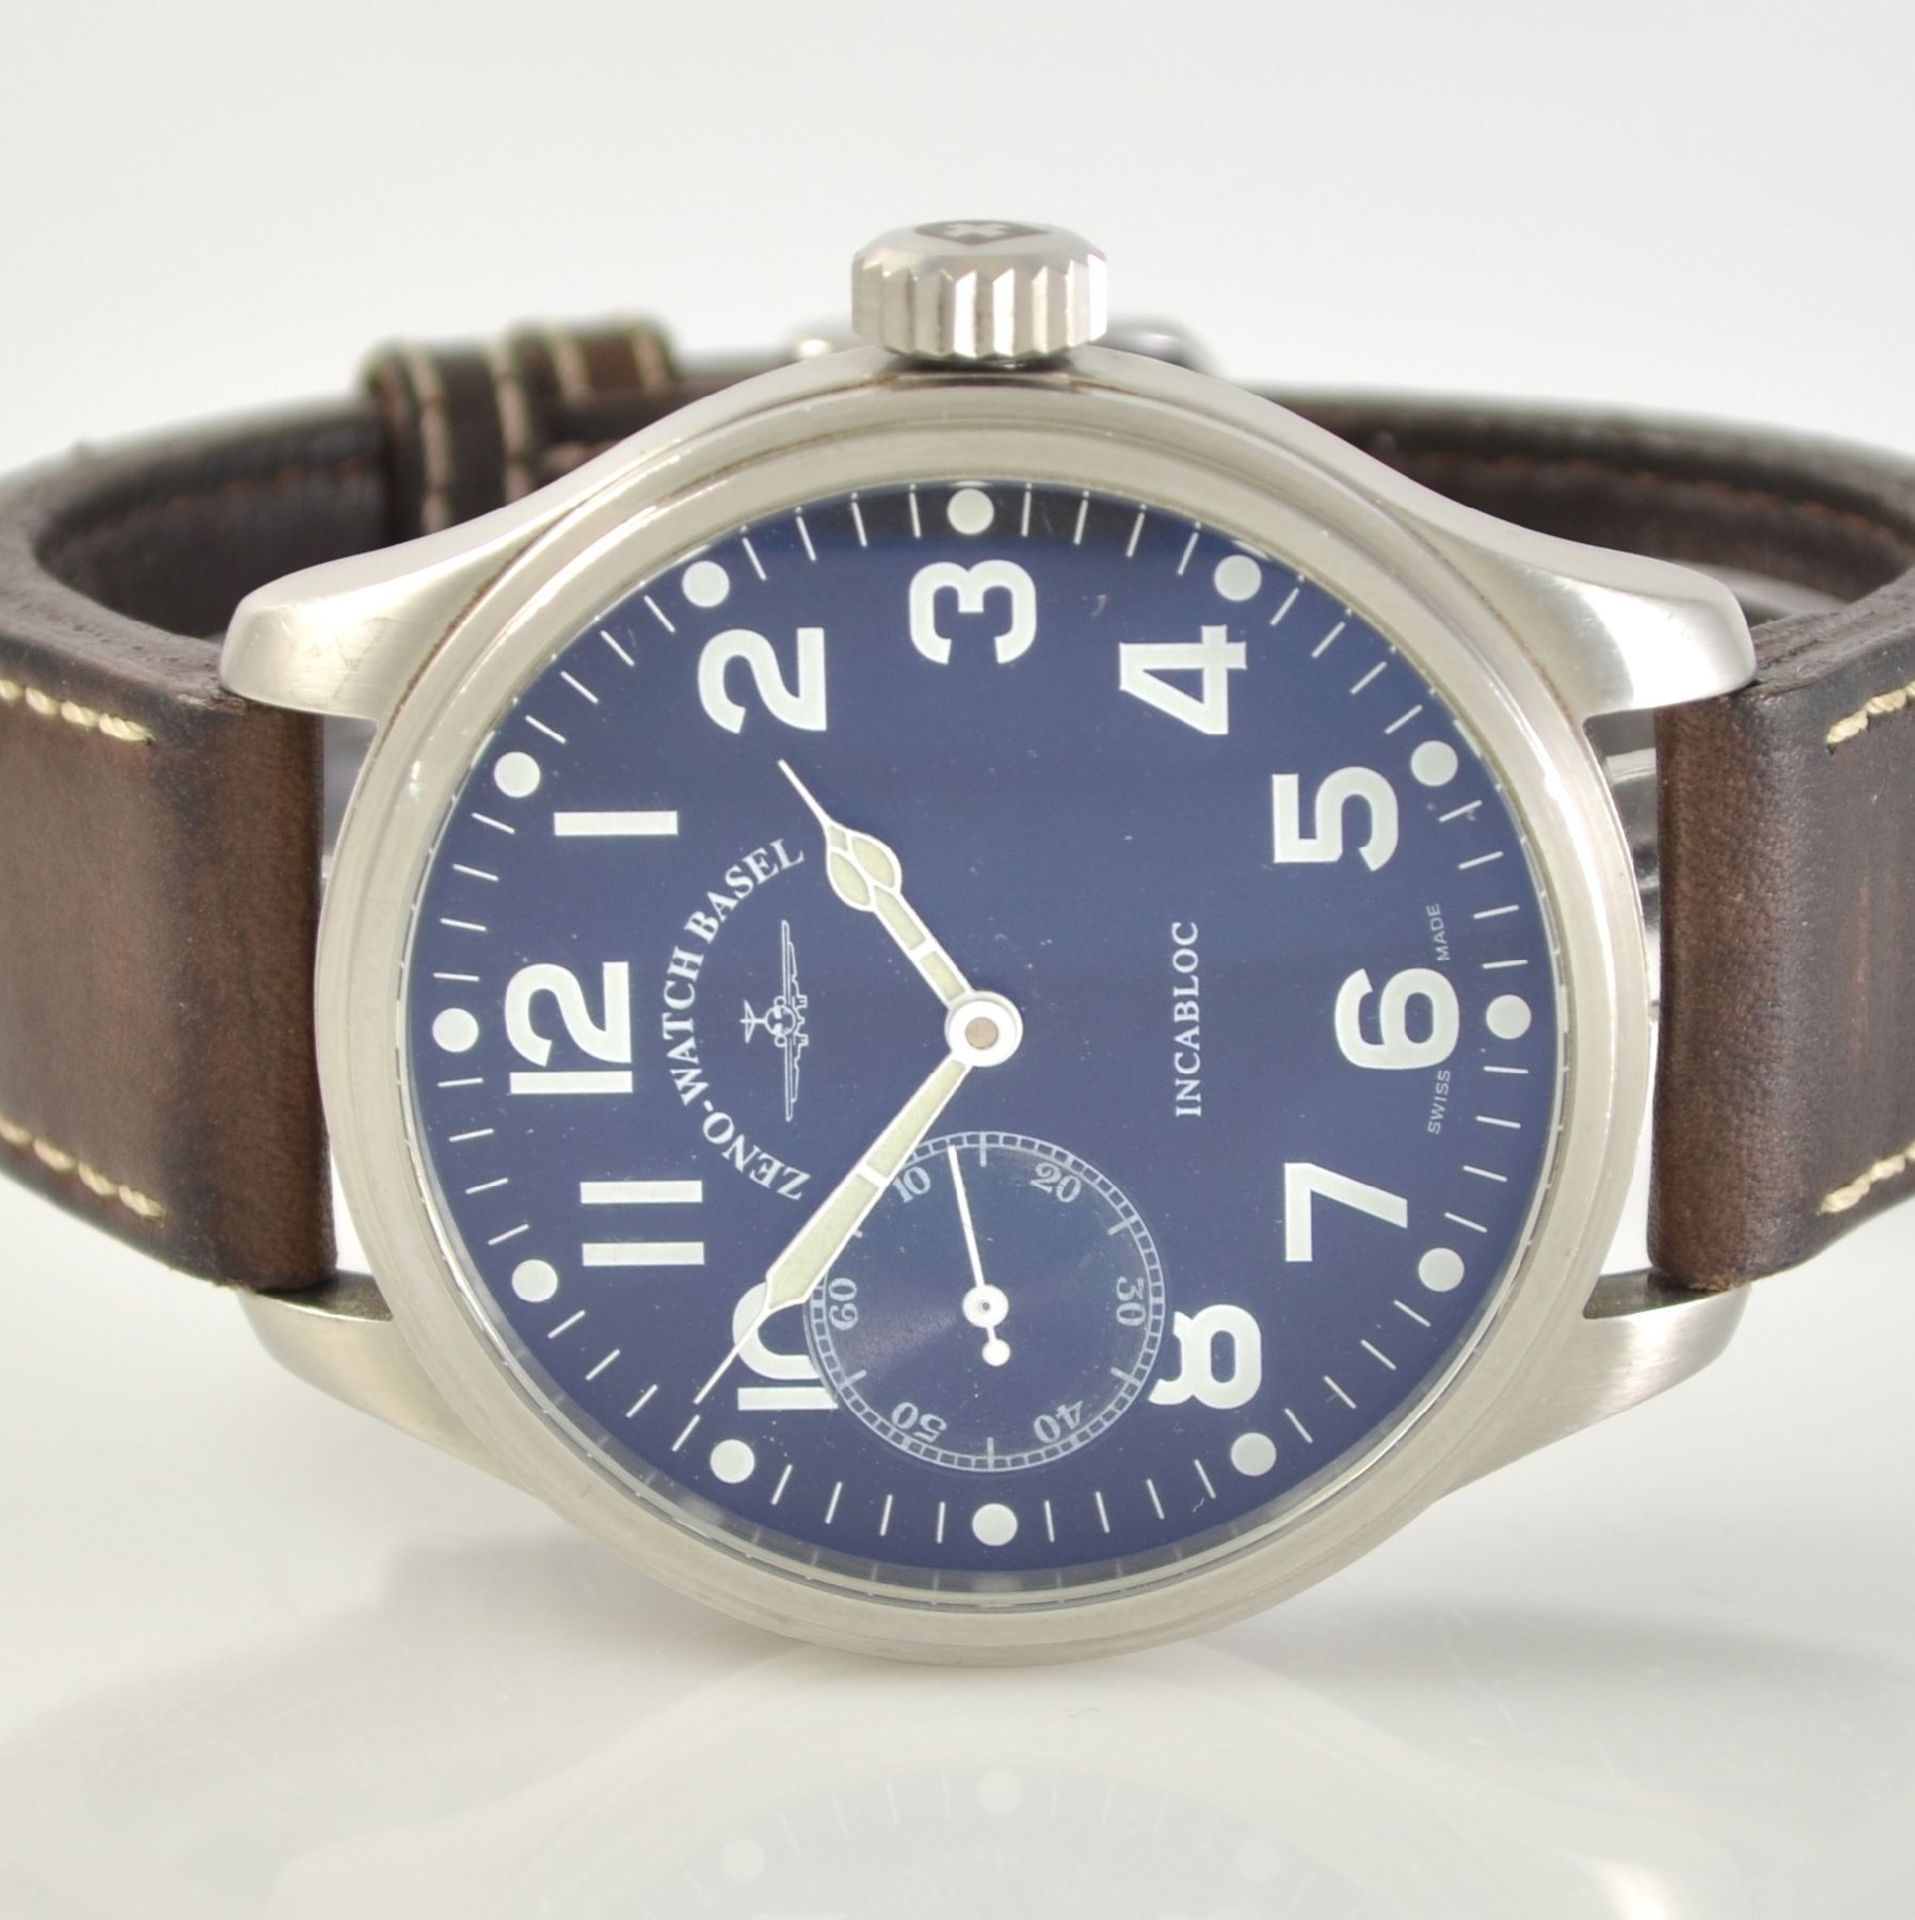 ZENO-WATCH BASEL Pilot big gents wristwatch, Switzerland sold in May 2006 according to warranty - Bild 2 aus 7